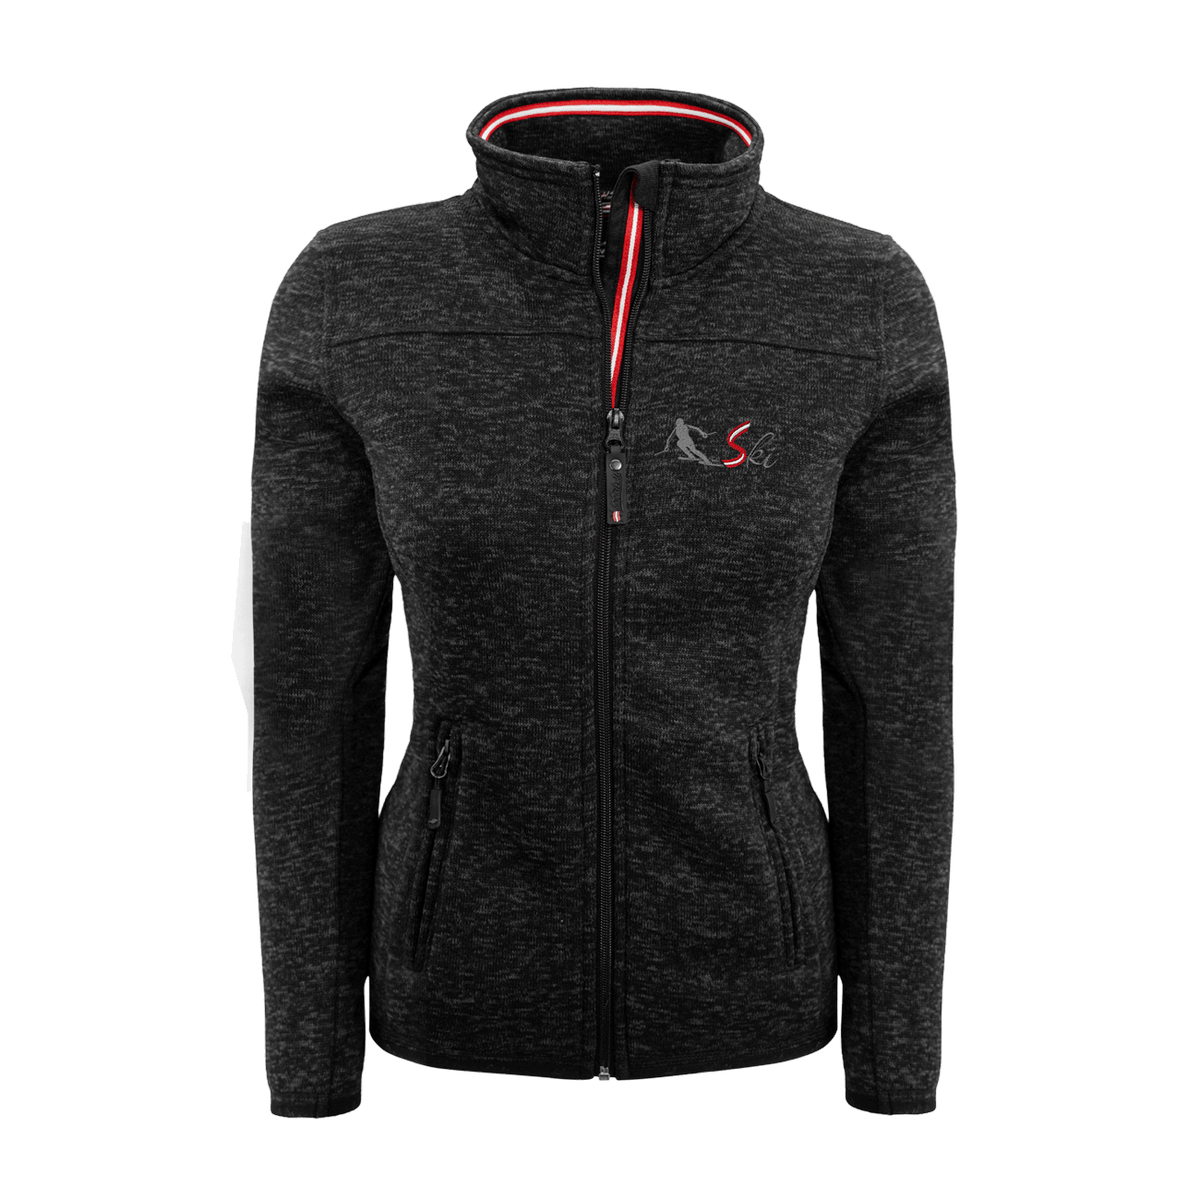 Damen Strickfleece Jacke ohne Kapuze schwarz Skifahrer Motiv #Farbe_Schwarz